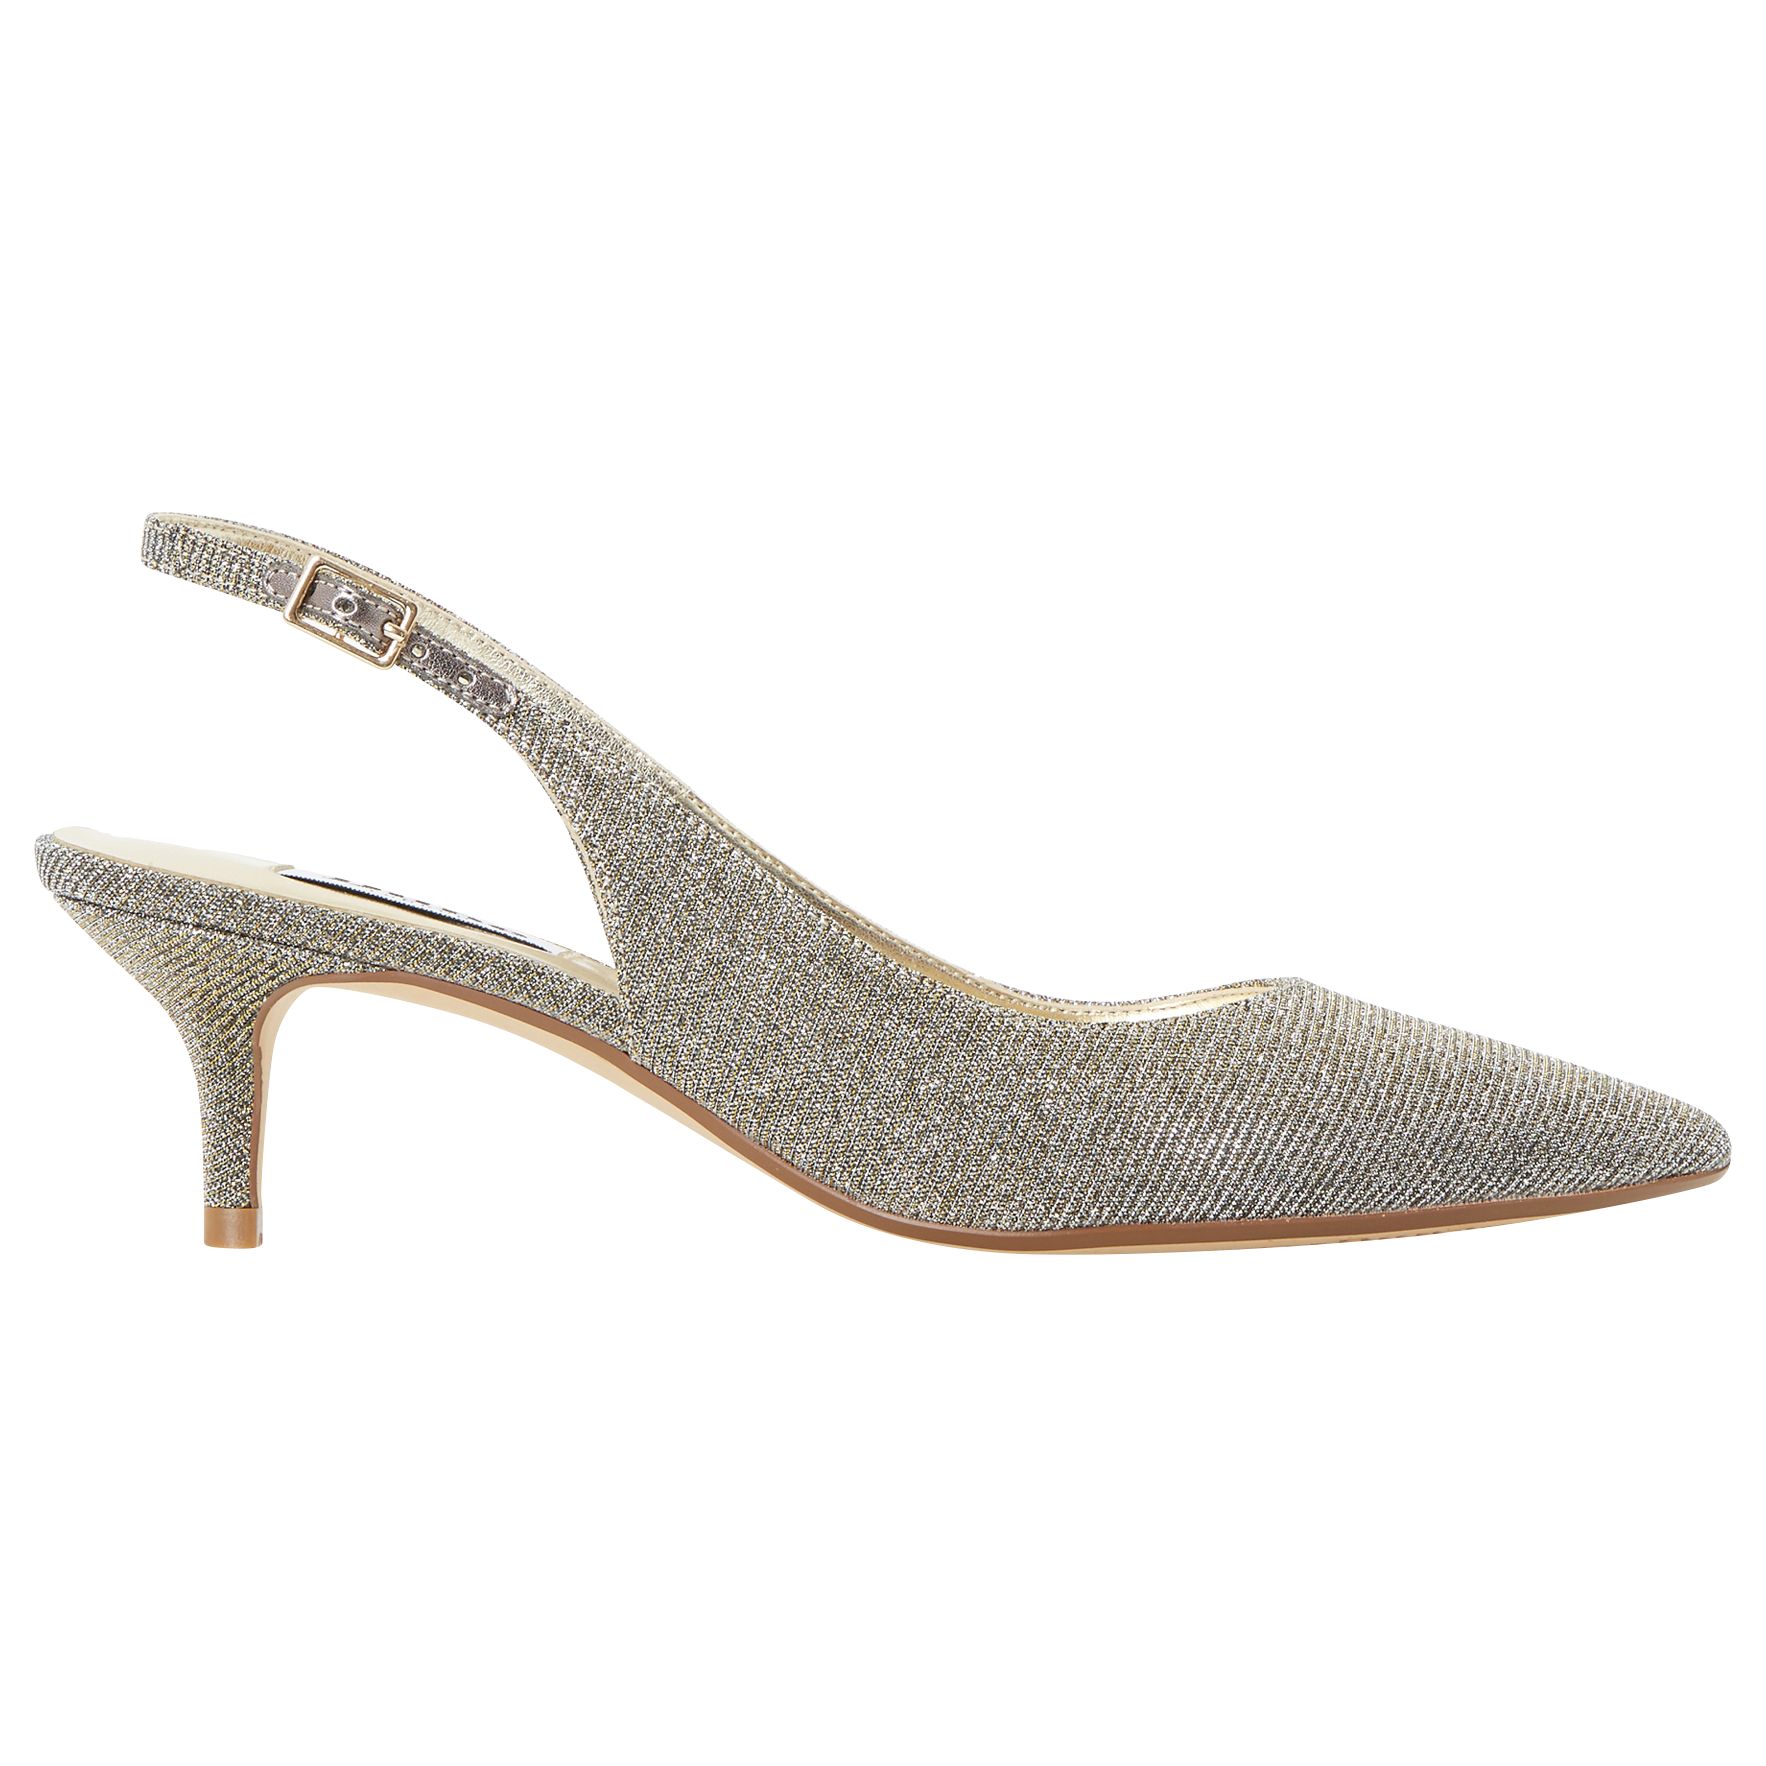 Dune Casandra Kitten Heel Slingback Court Shoes, Gold Fabric, 3